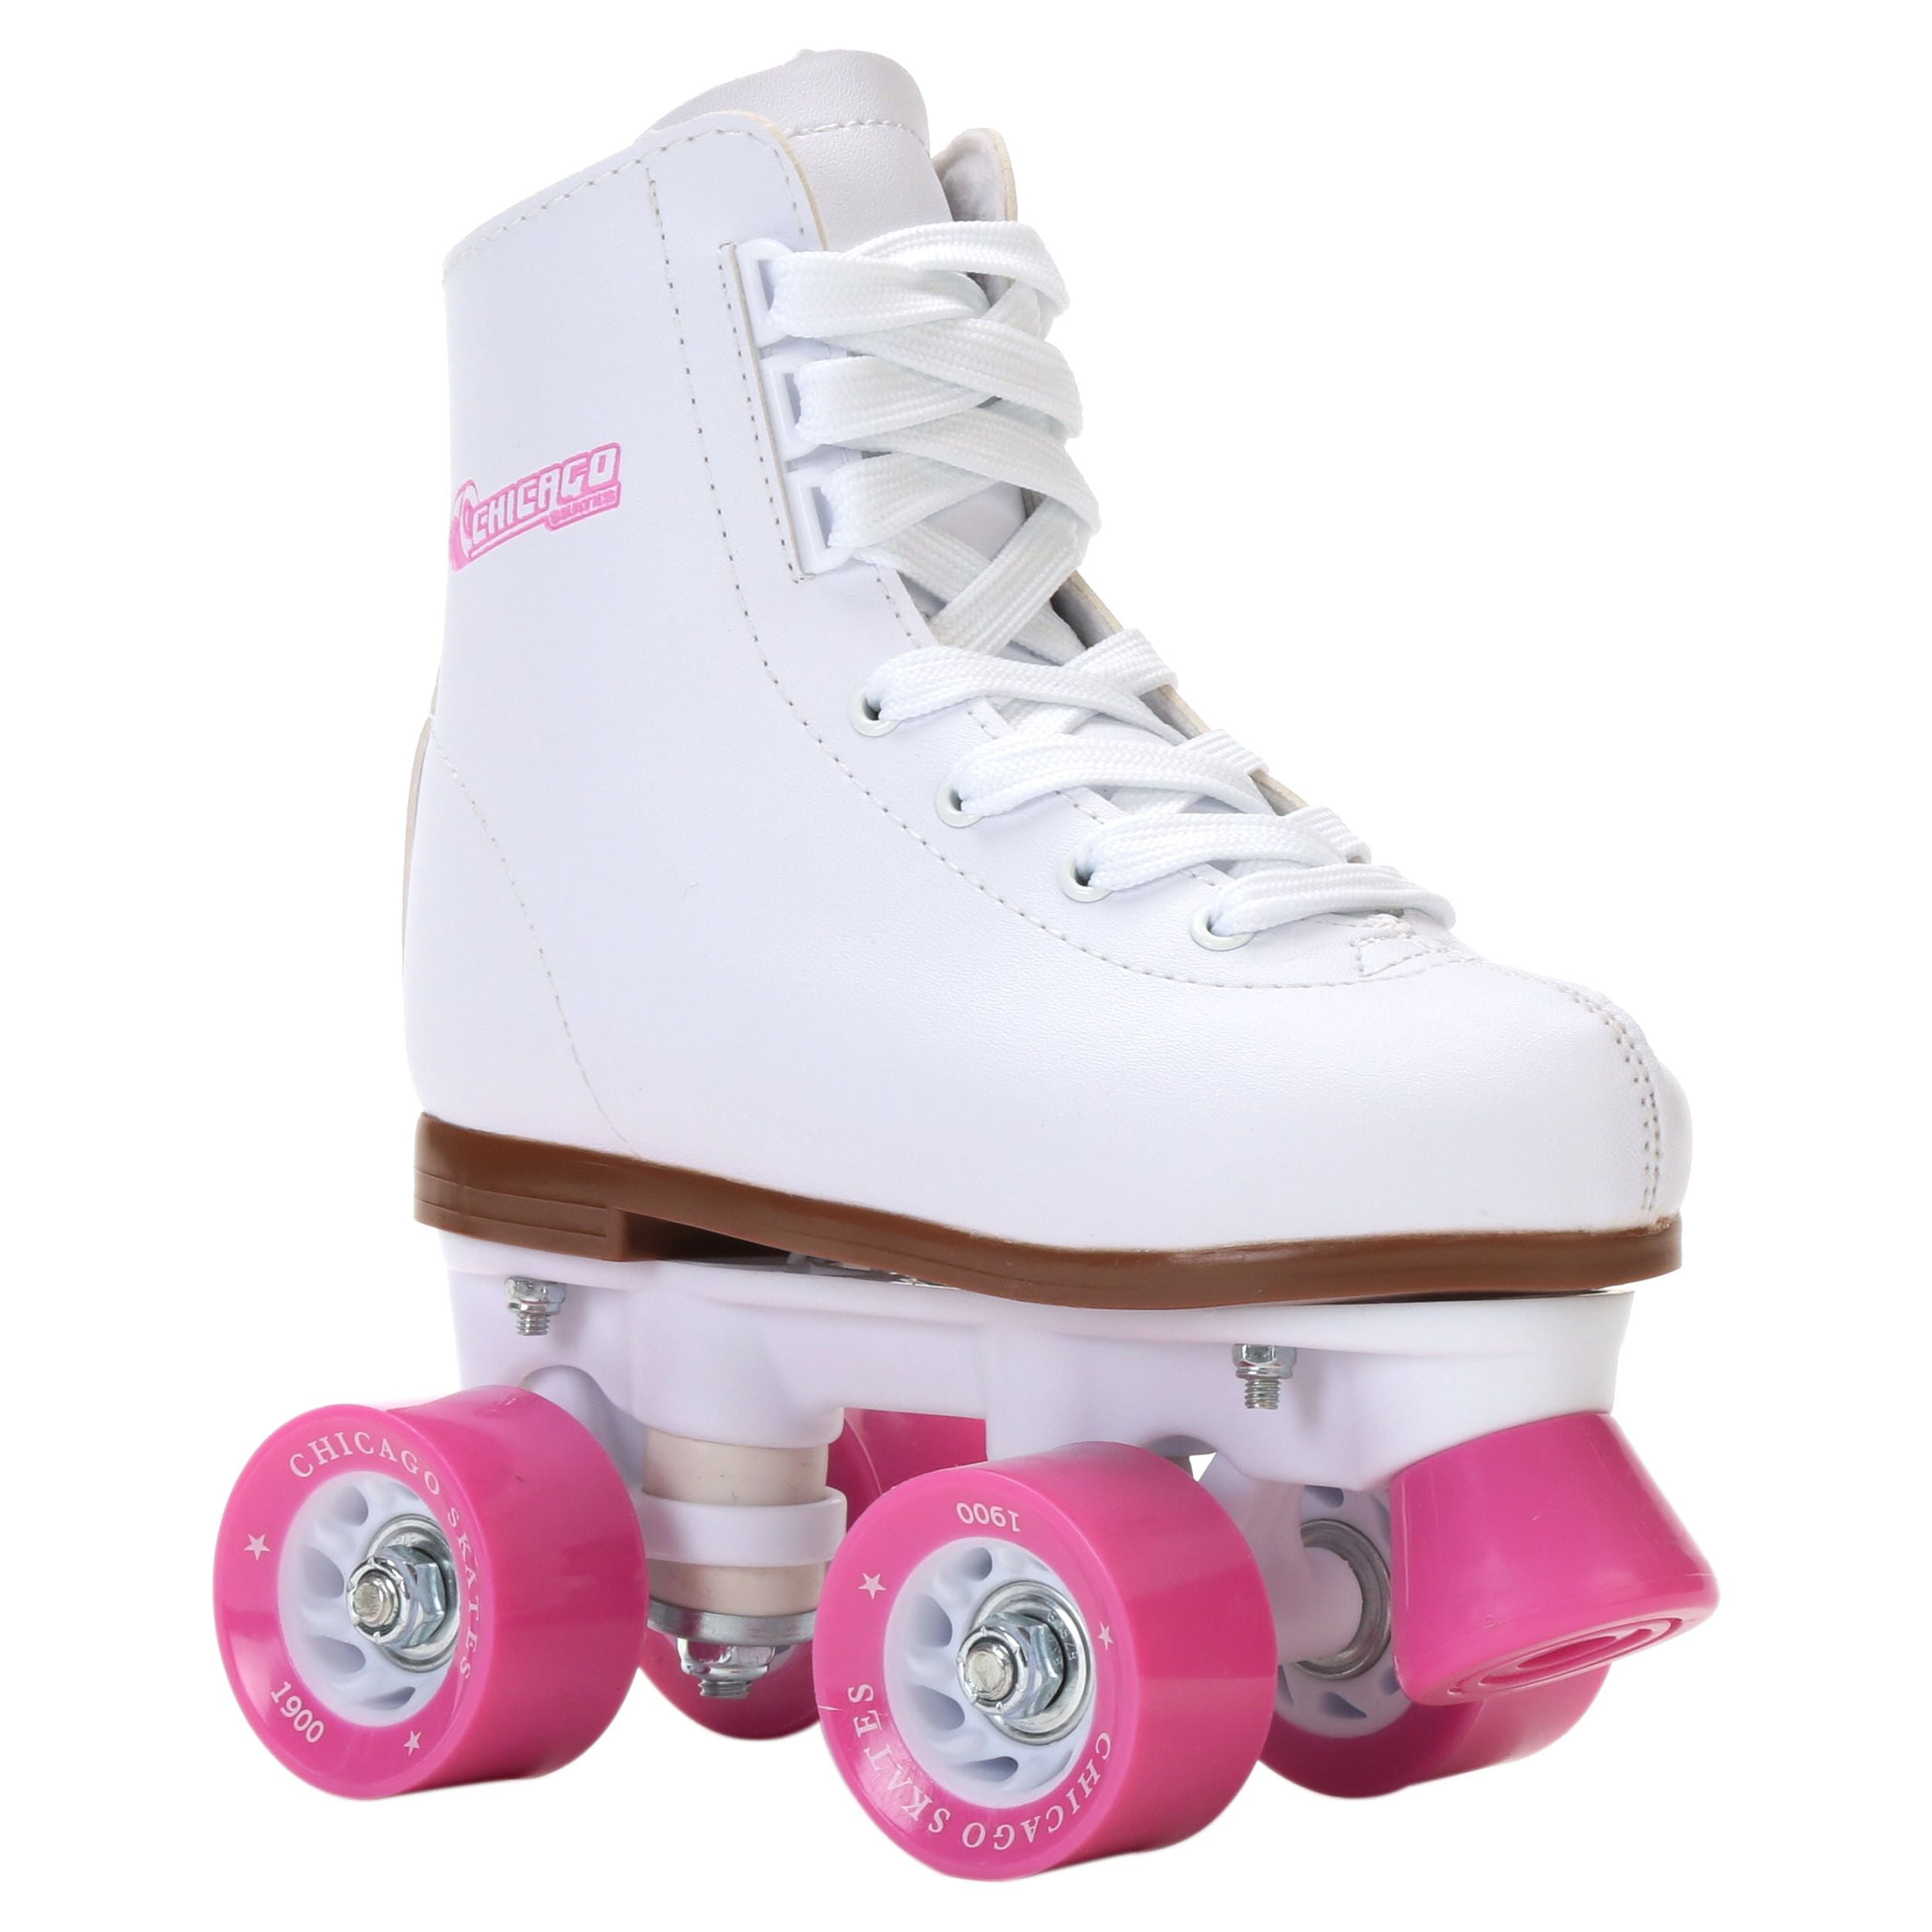 Prettyfly Retro Quad Adult Skates - Pastel Pink (Size 6), One Pair Women  Skates 